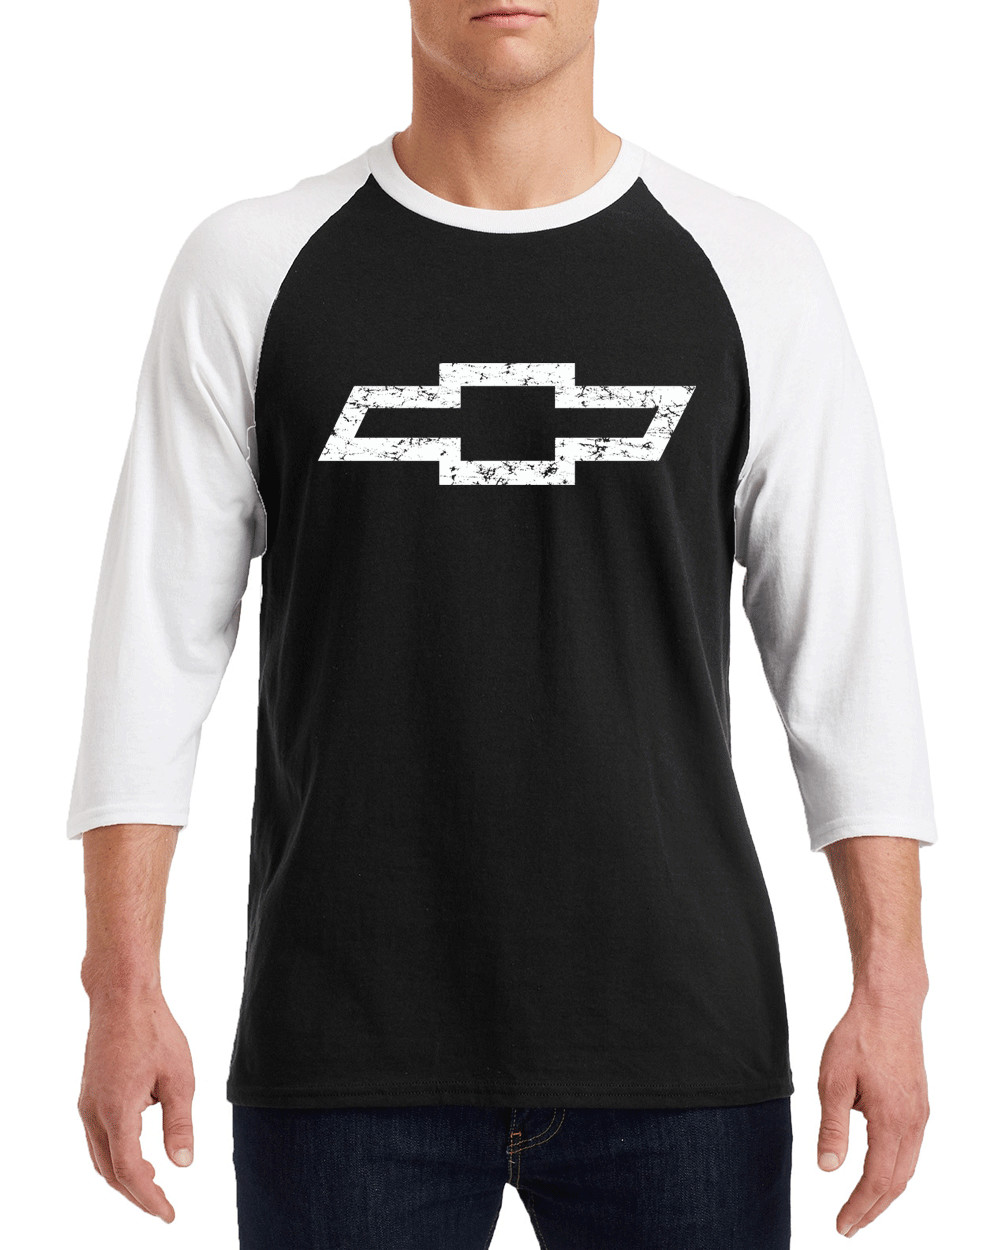 CHEVROLET CHEVY BOWTIE WHITE Logo Gildan G570 3/4 Sleeve Shirt "FREE SHIPPING" USA